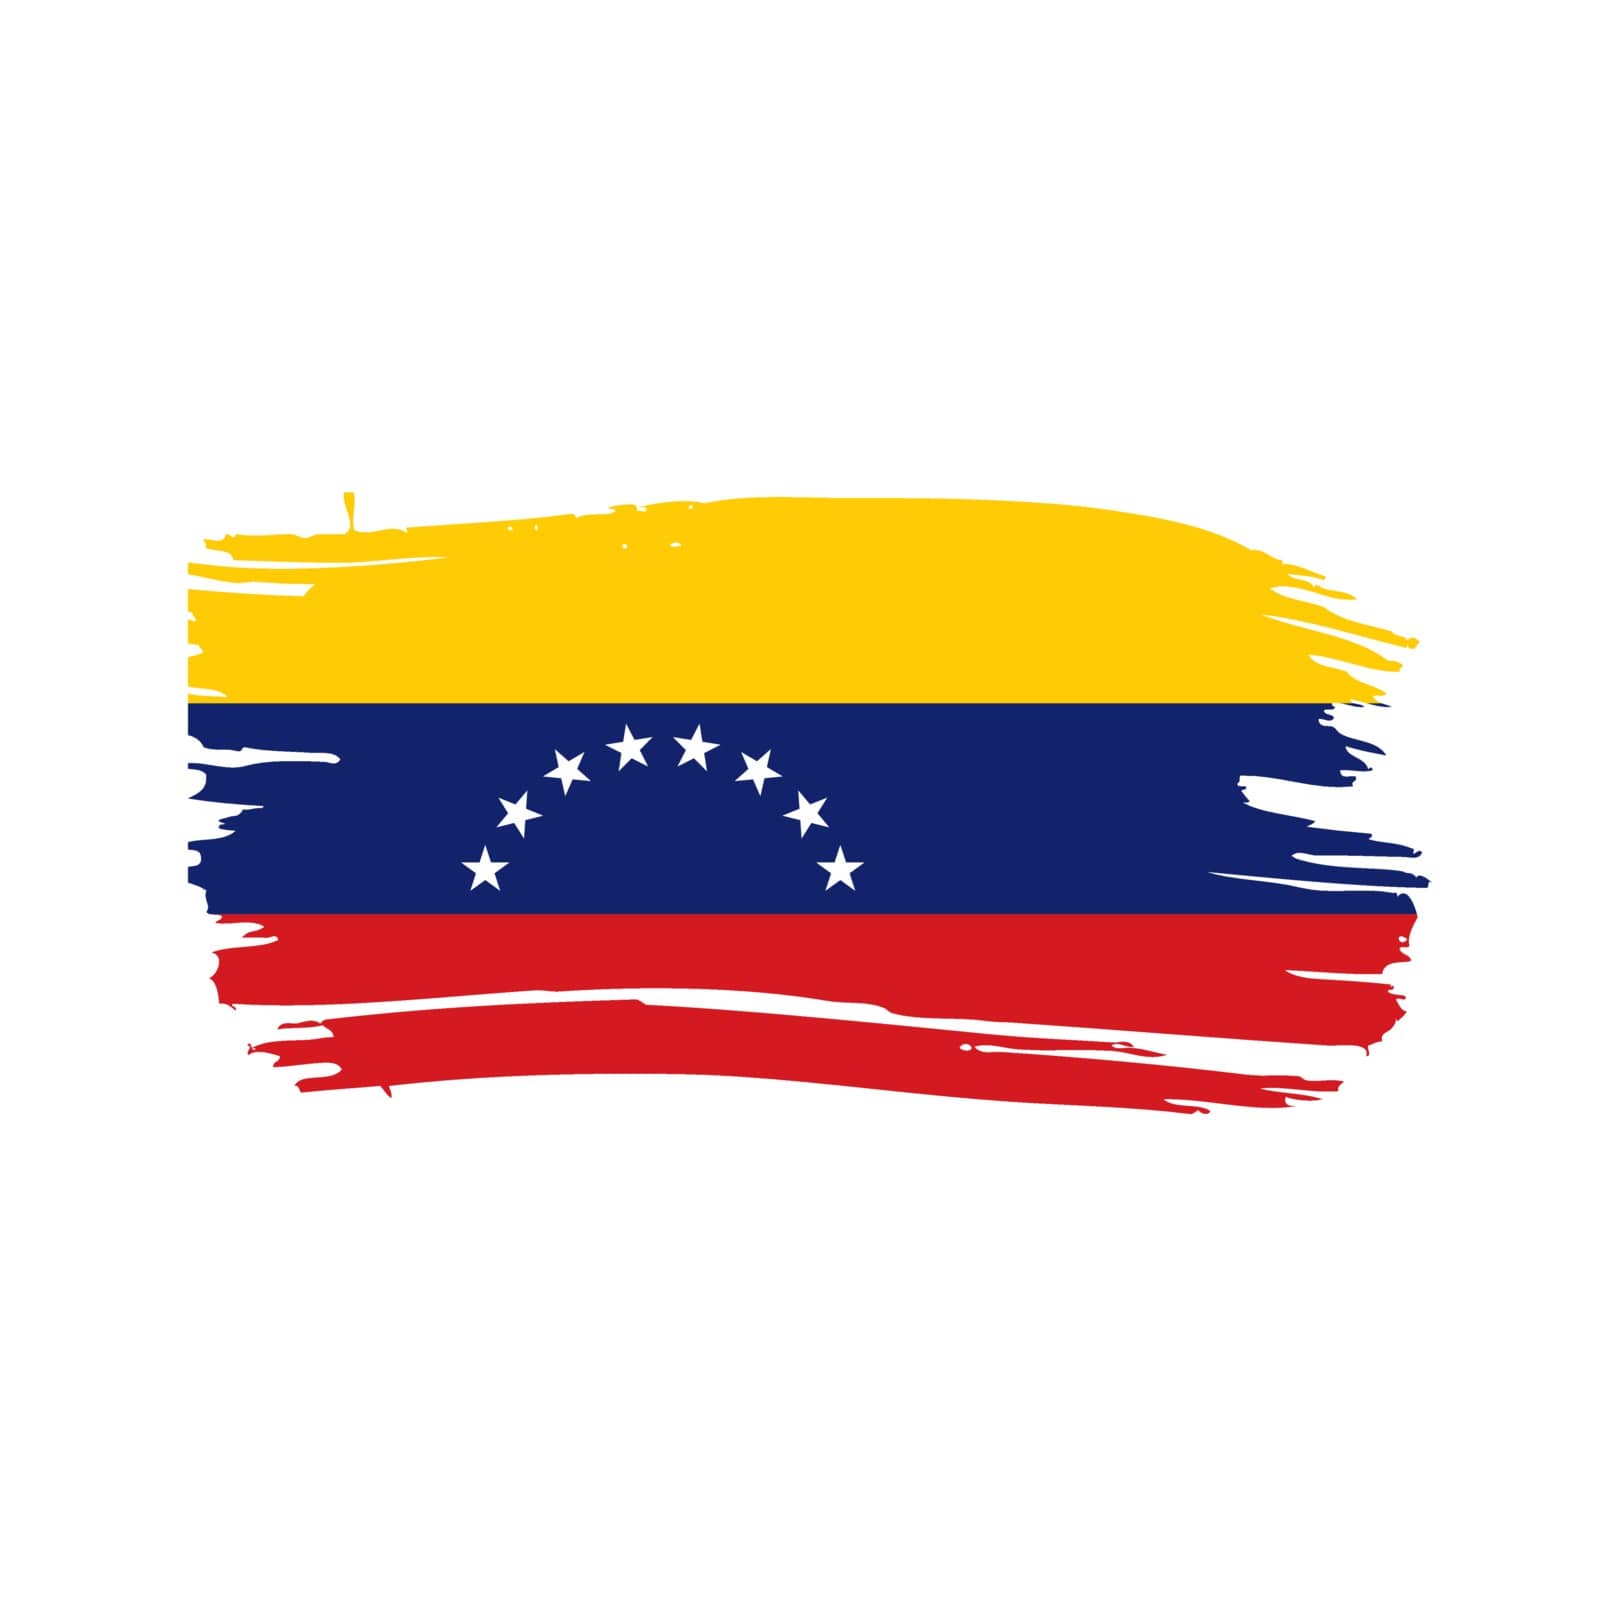 Venezuela flag, vector illustration by butenkow